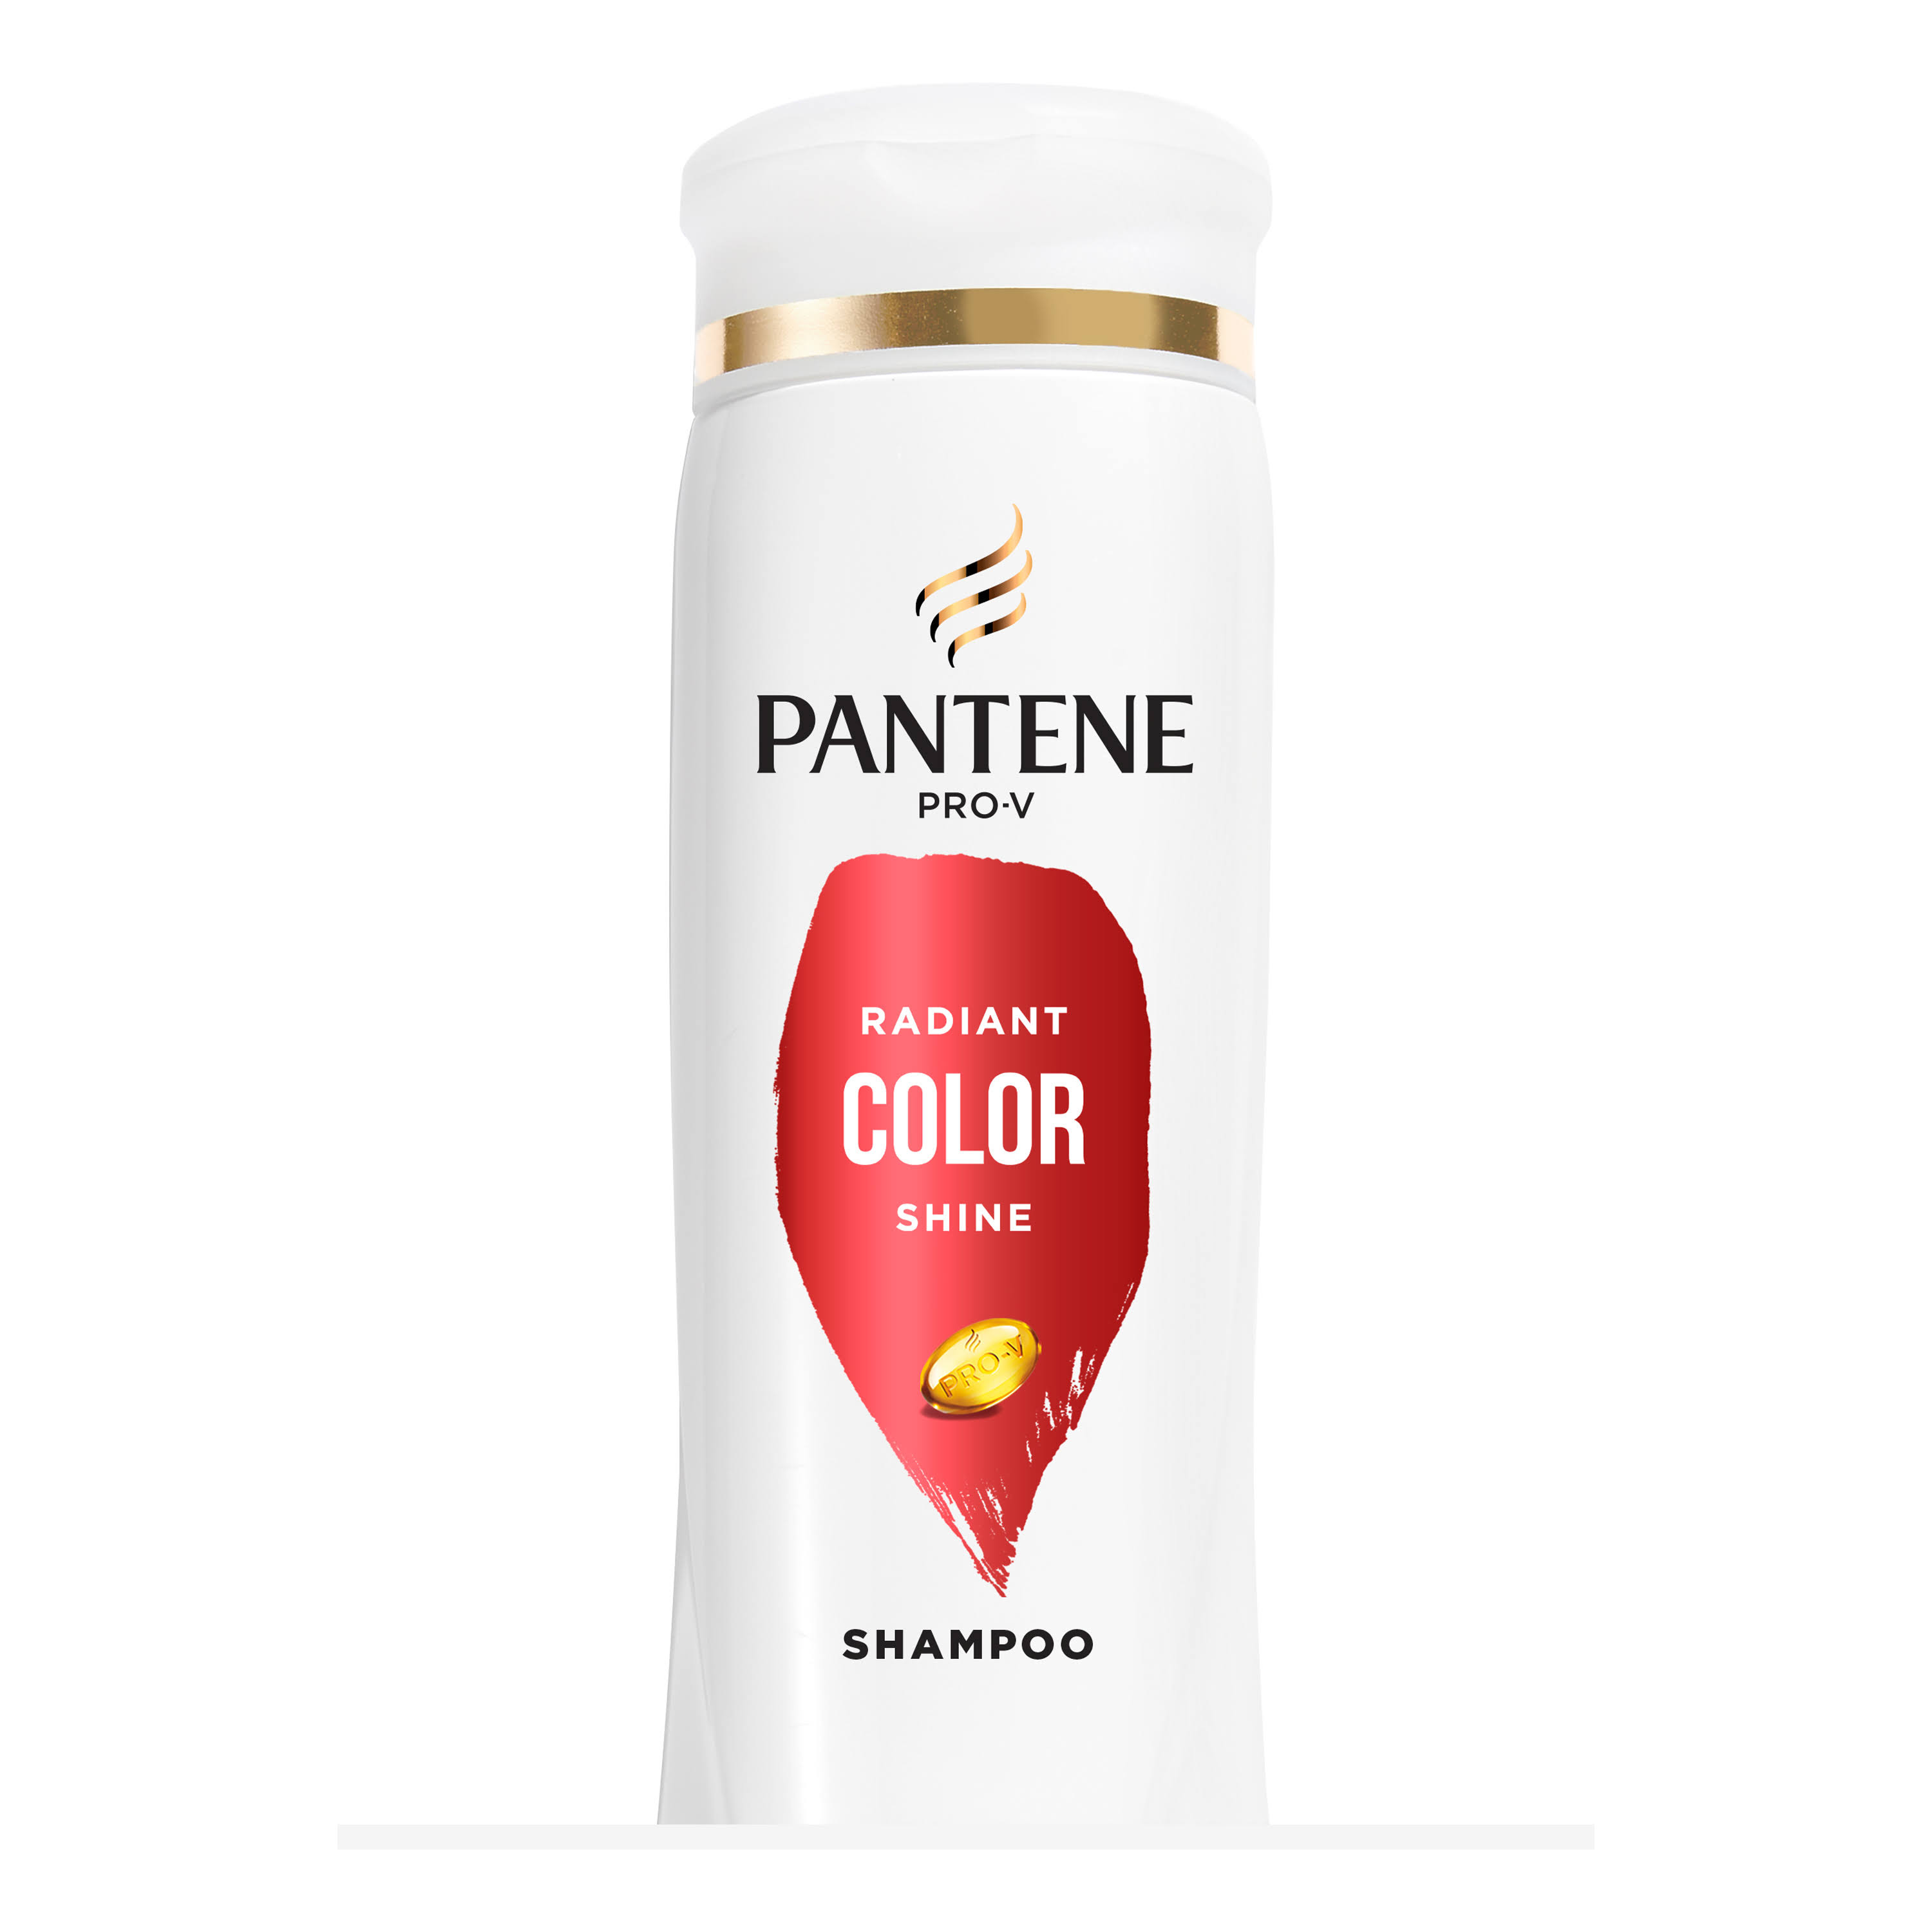 Pantene Pro-V Shampoo, Radiant Color Shine - 355 ml